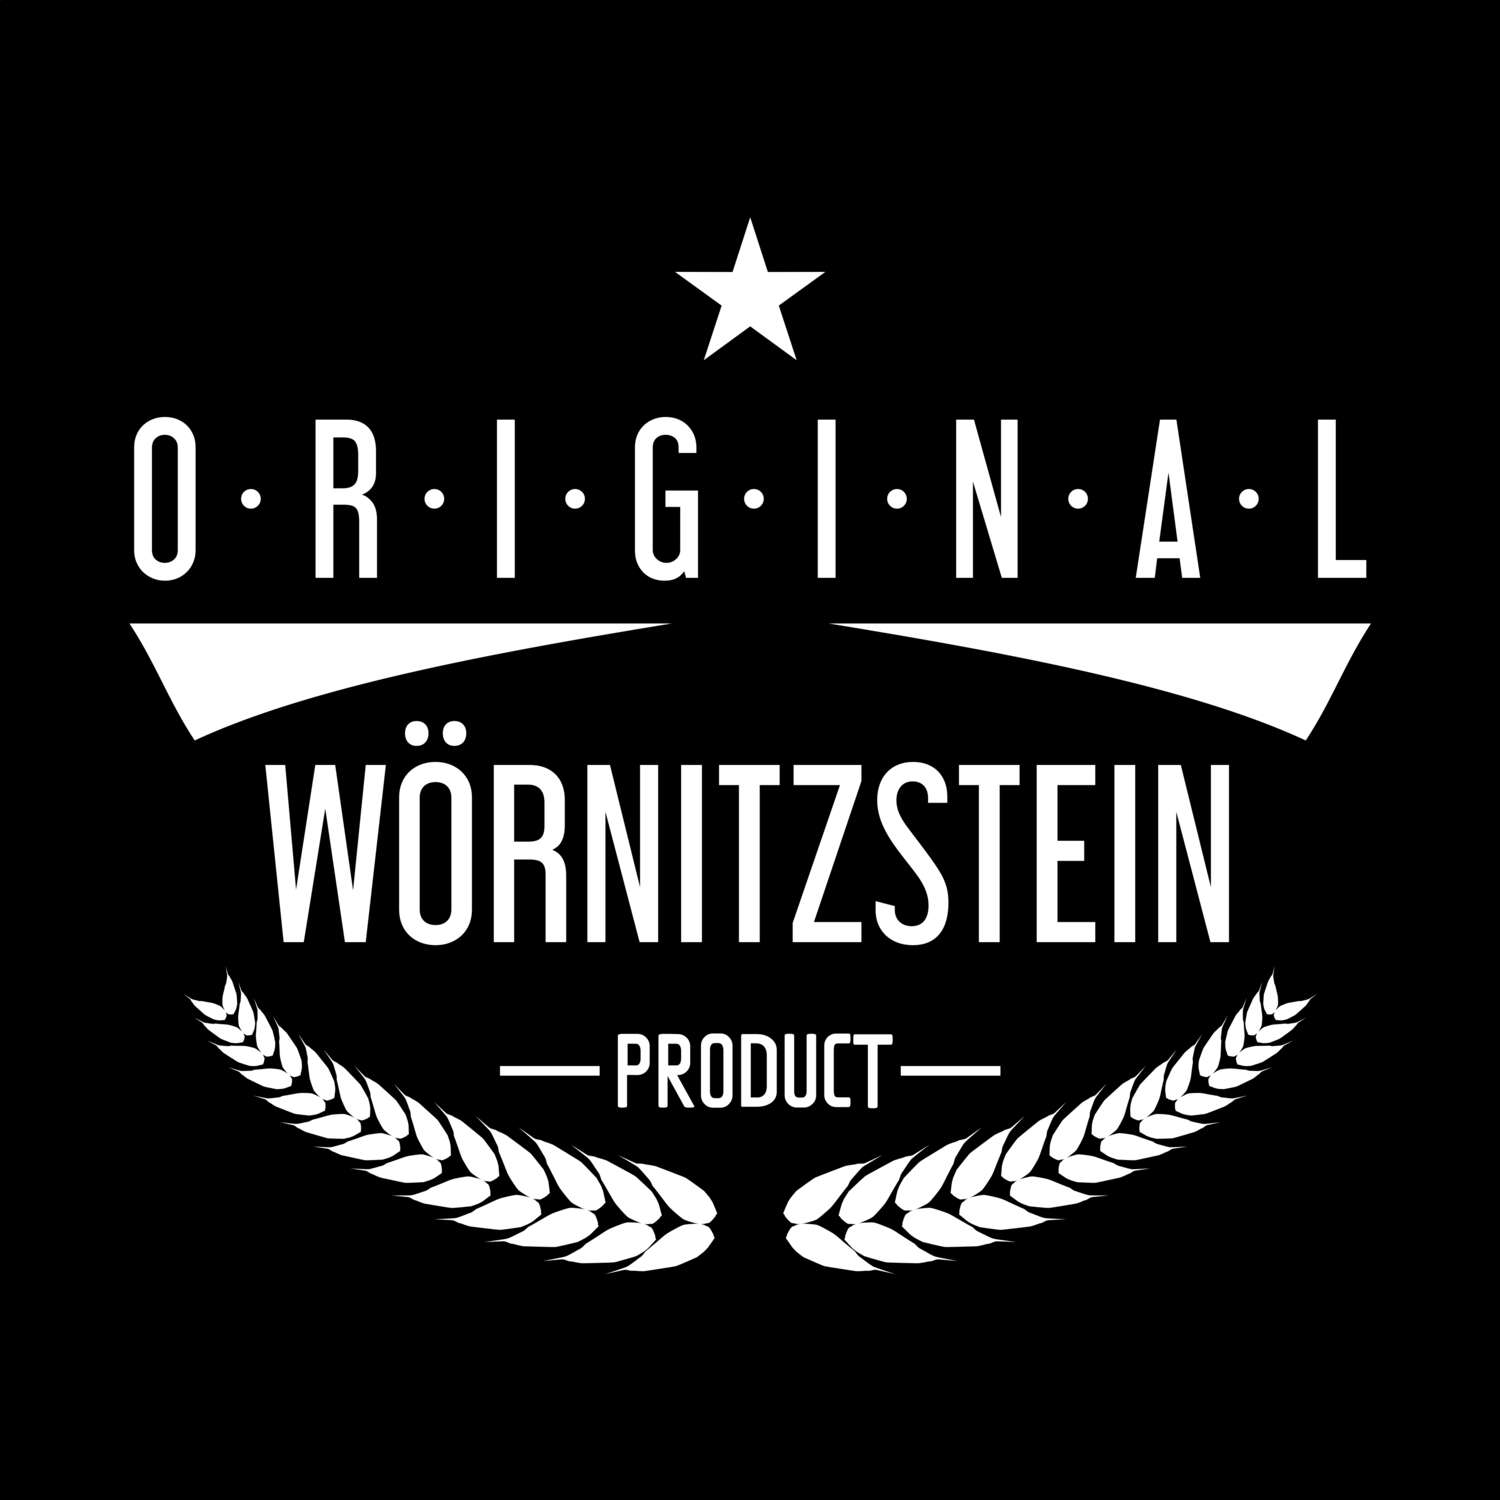 Wörnitzstein T-Shirt »Original Product«